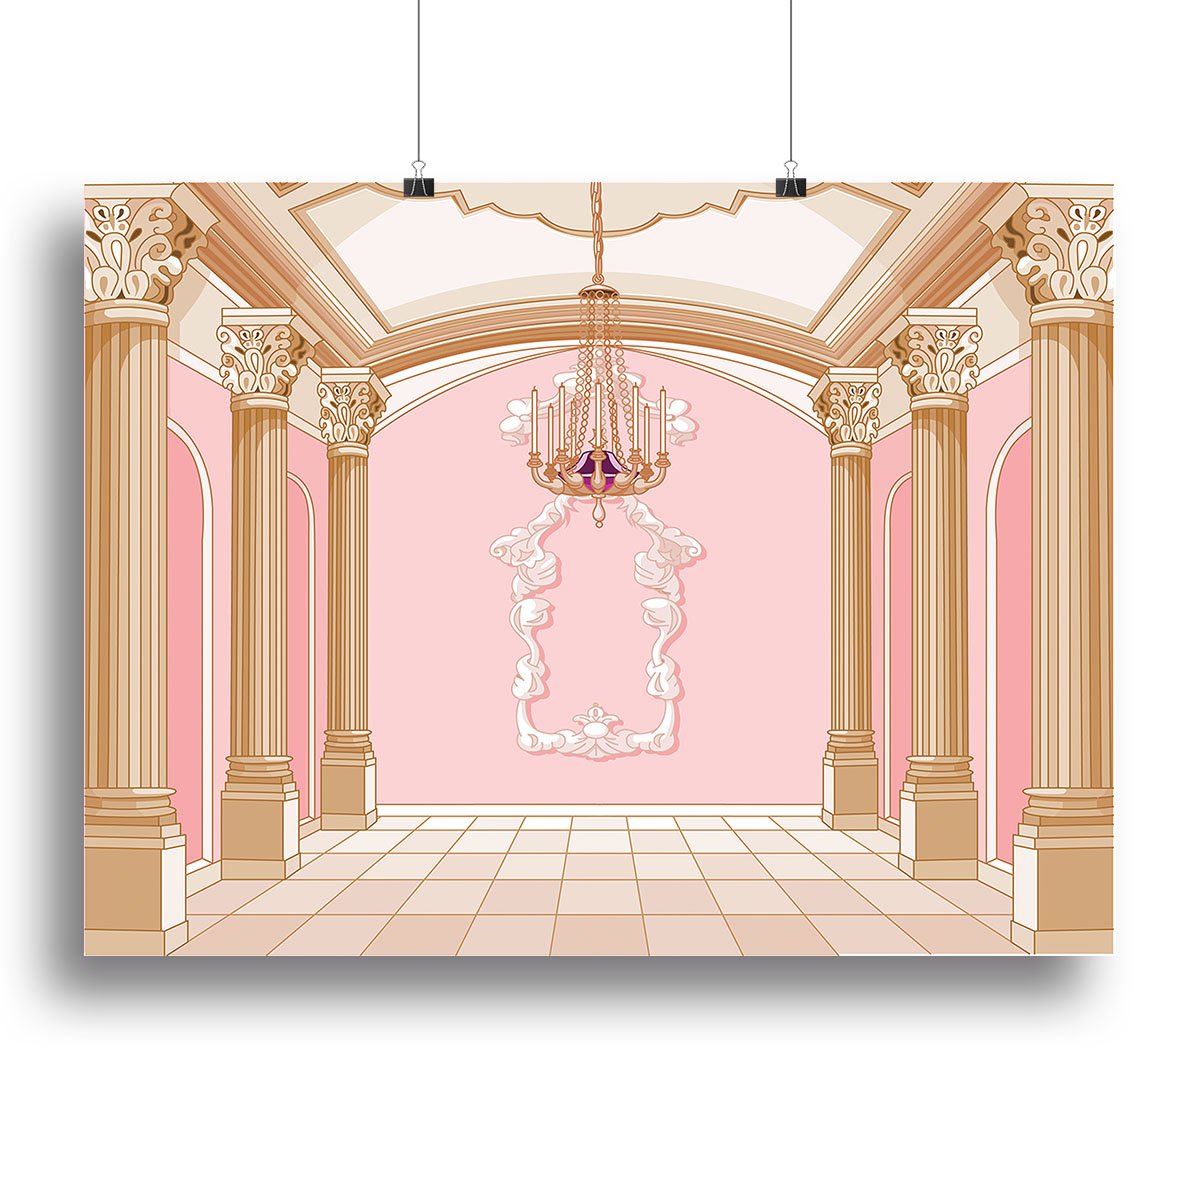 ballroom of magic castle Canvas Print or Poster